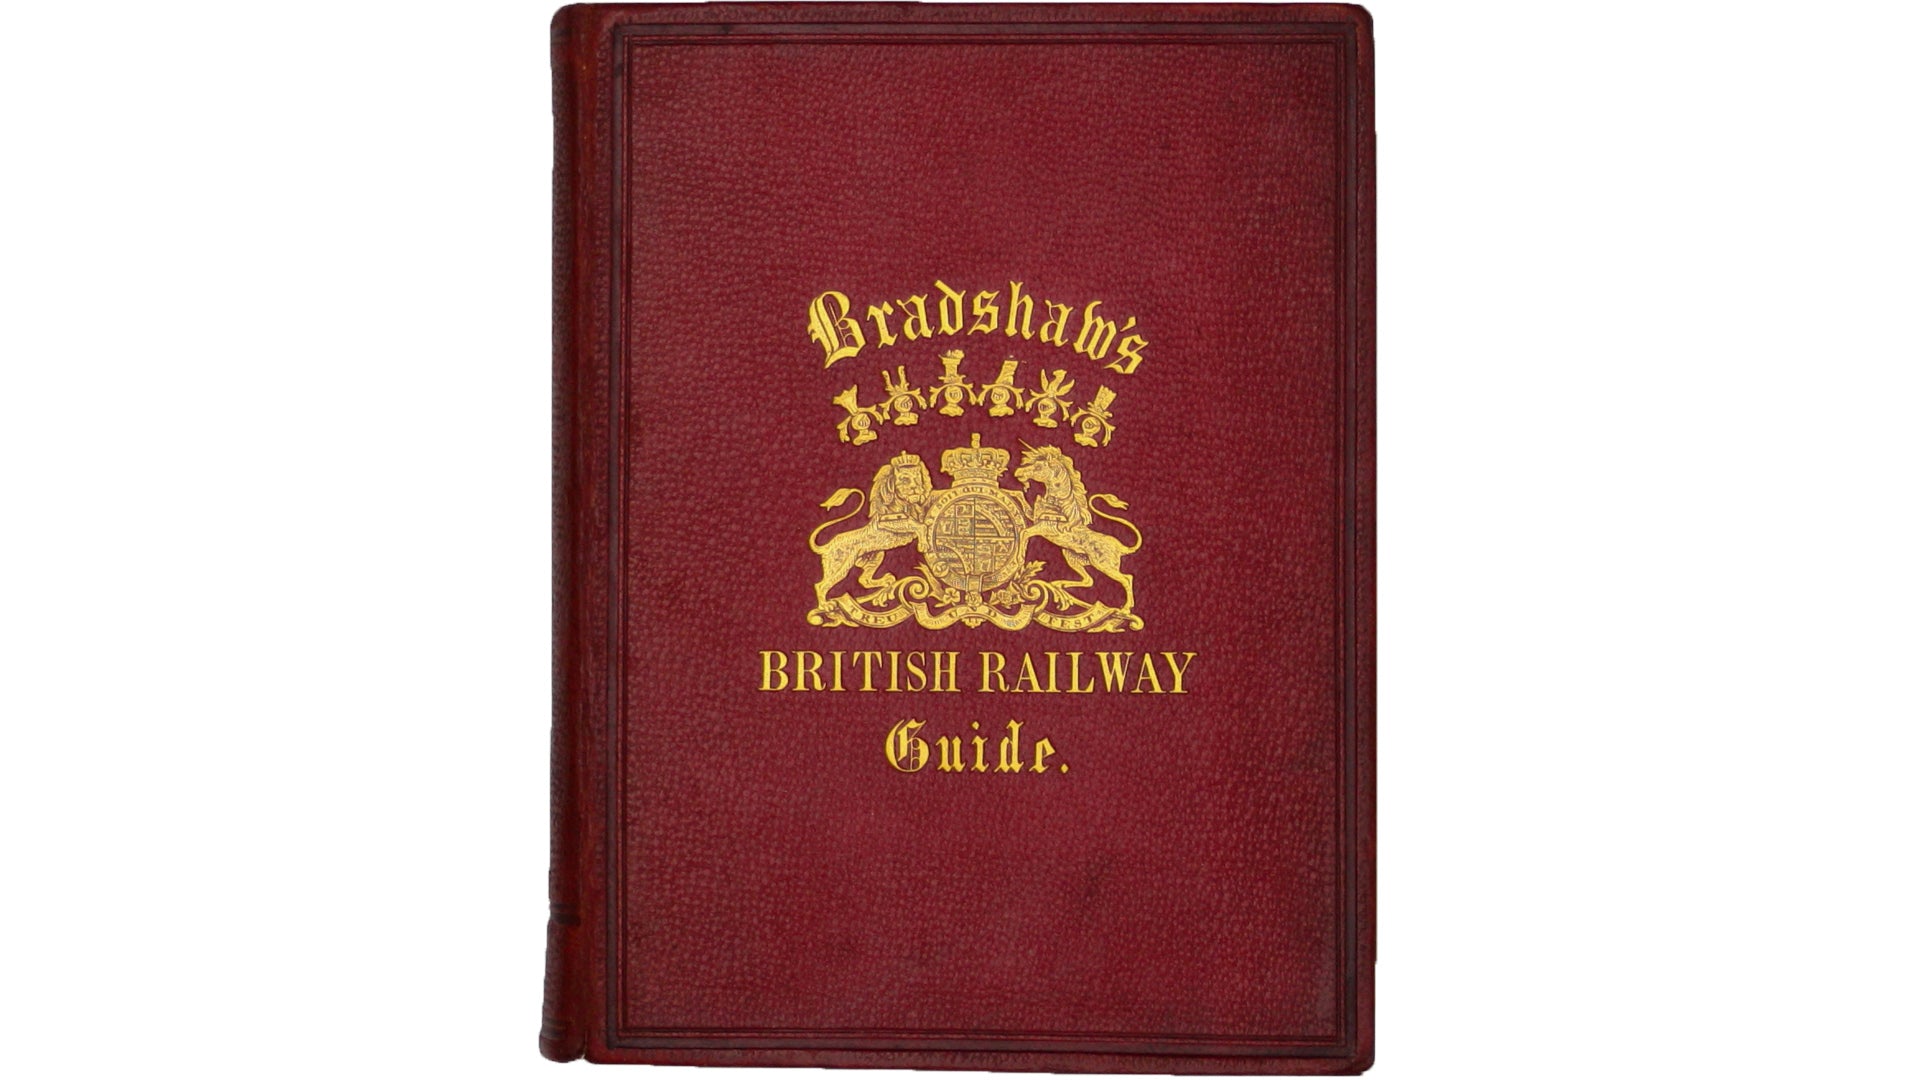 Bradshaw’s Railway Guide from Prince Albert’s Household